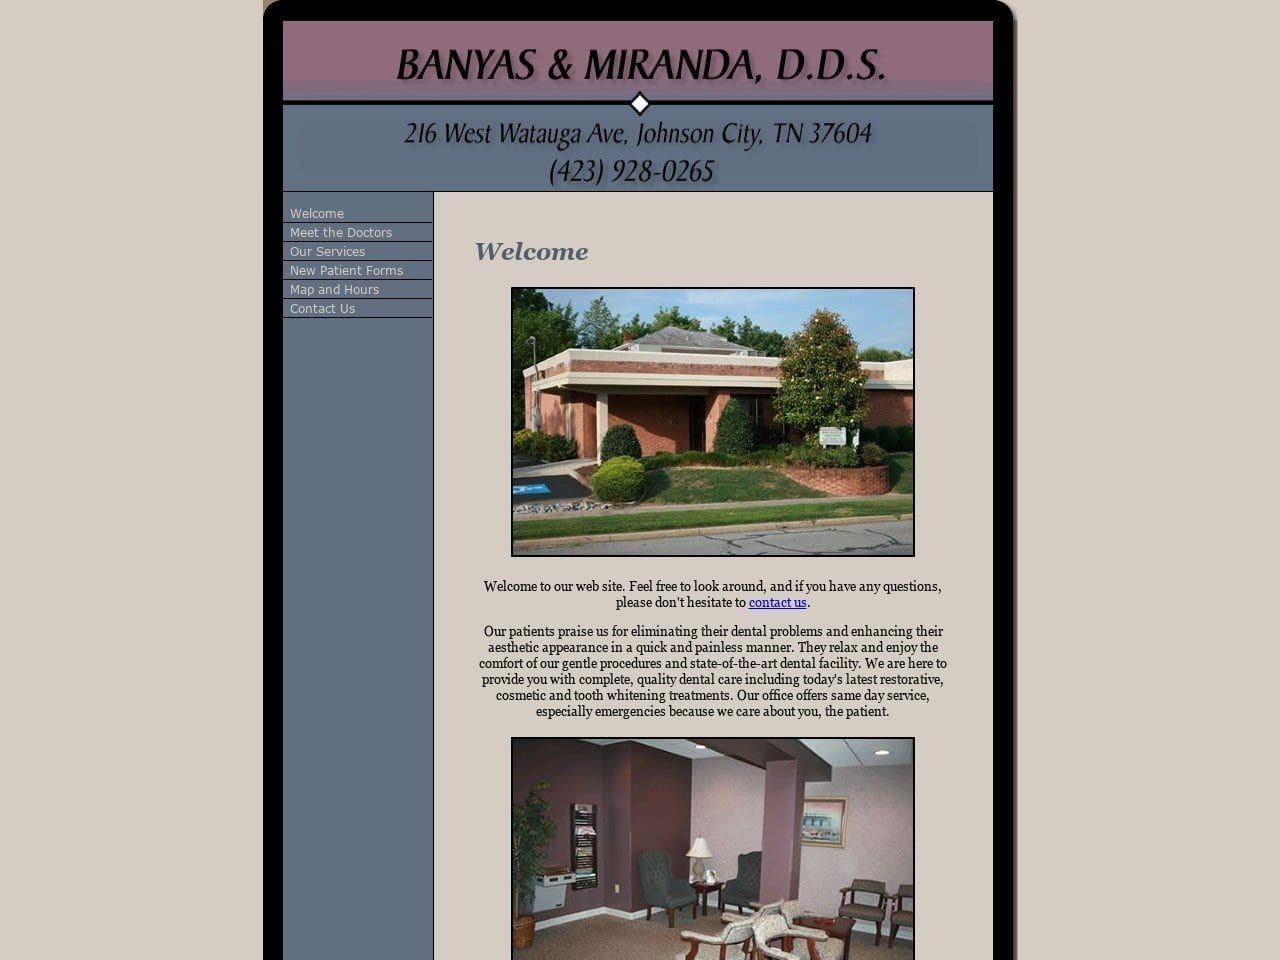 Banyas & Miranda Miranda David DDS Website Screenshot from banyasandmirandadds.com